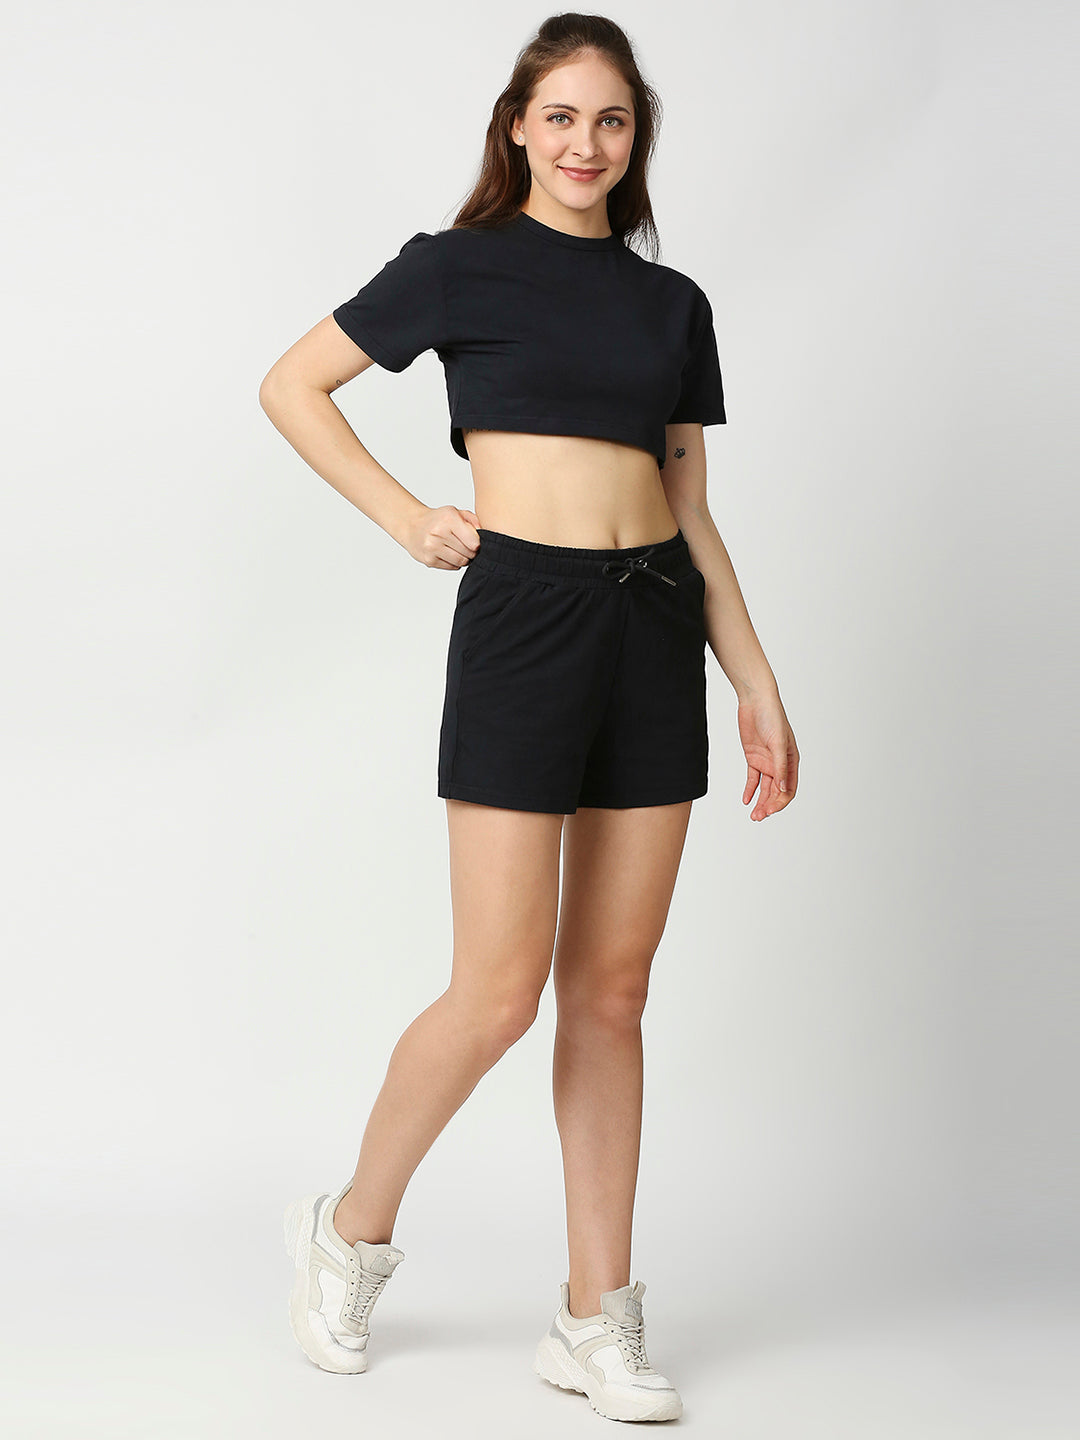 Buy Blamblack Women's Black Color Half Sleeves Short Set